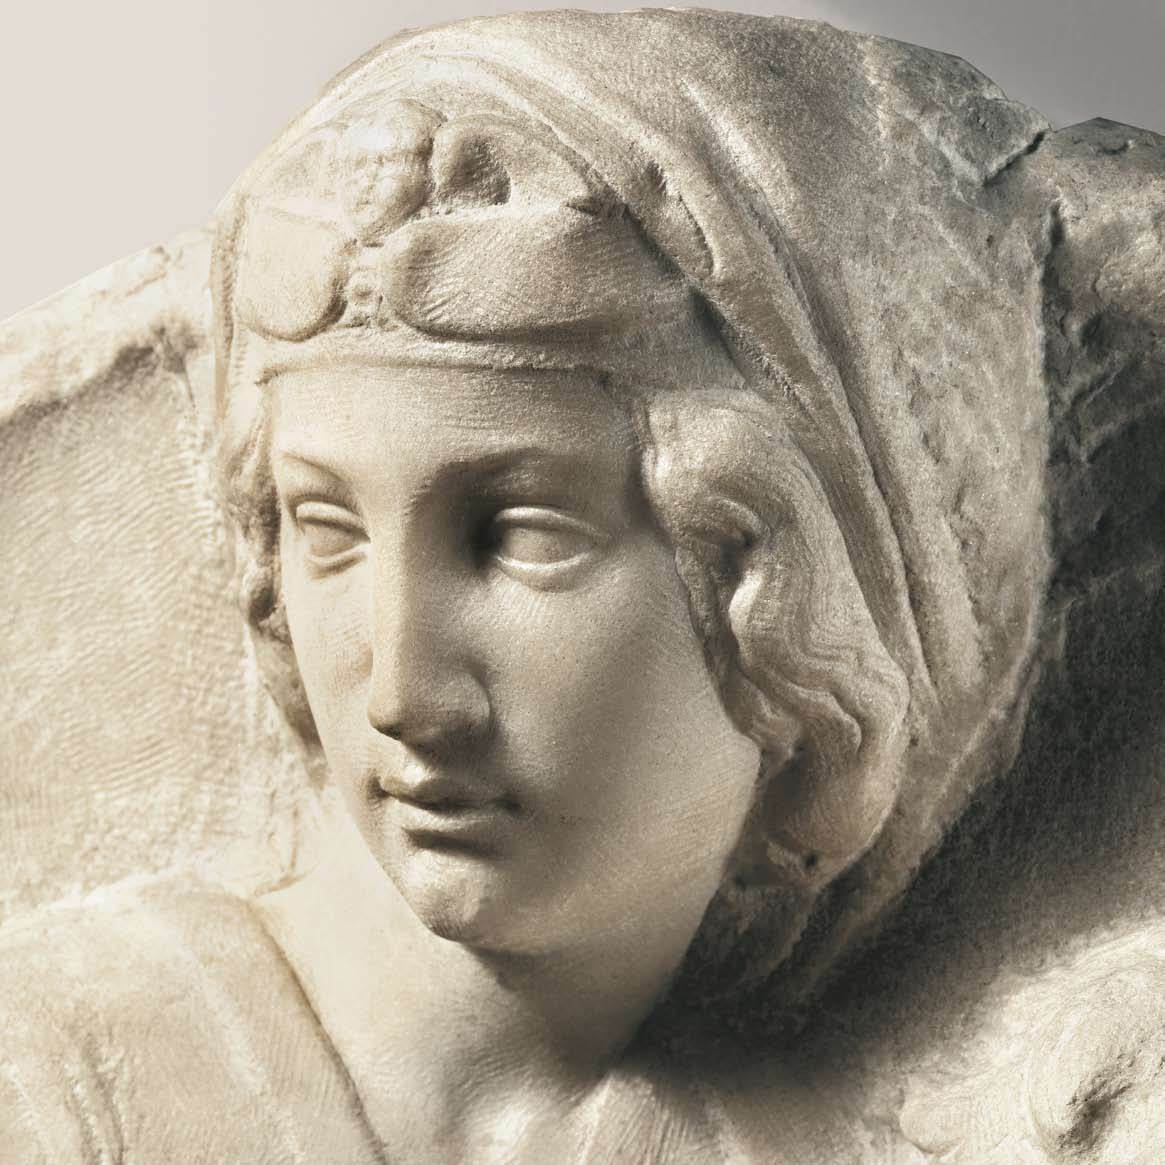 Michelangelo+Buonarroti-1475-1564 (286).jpg